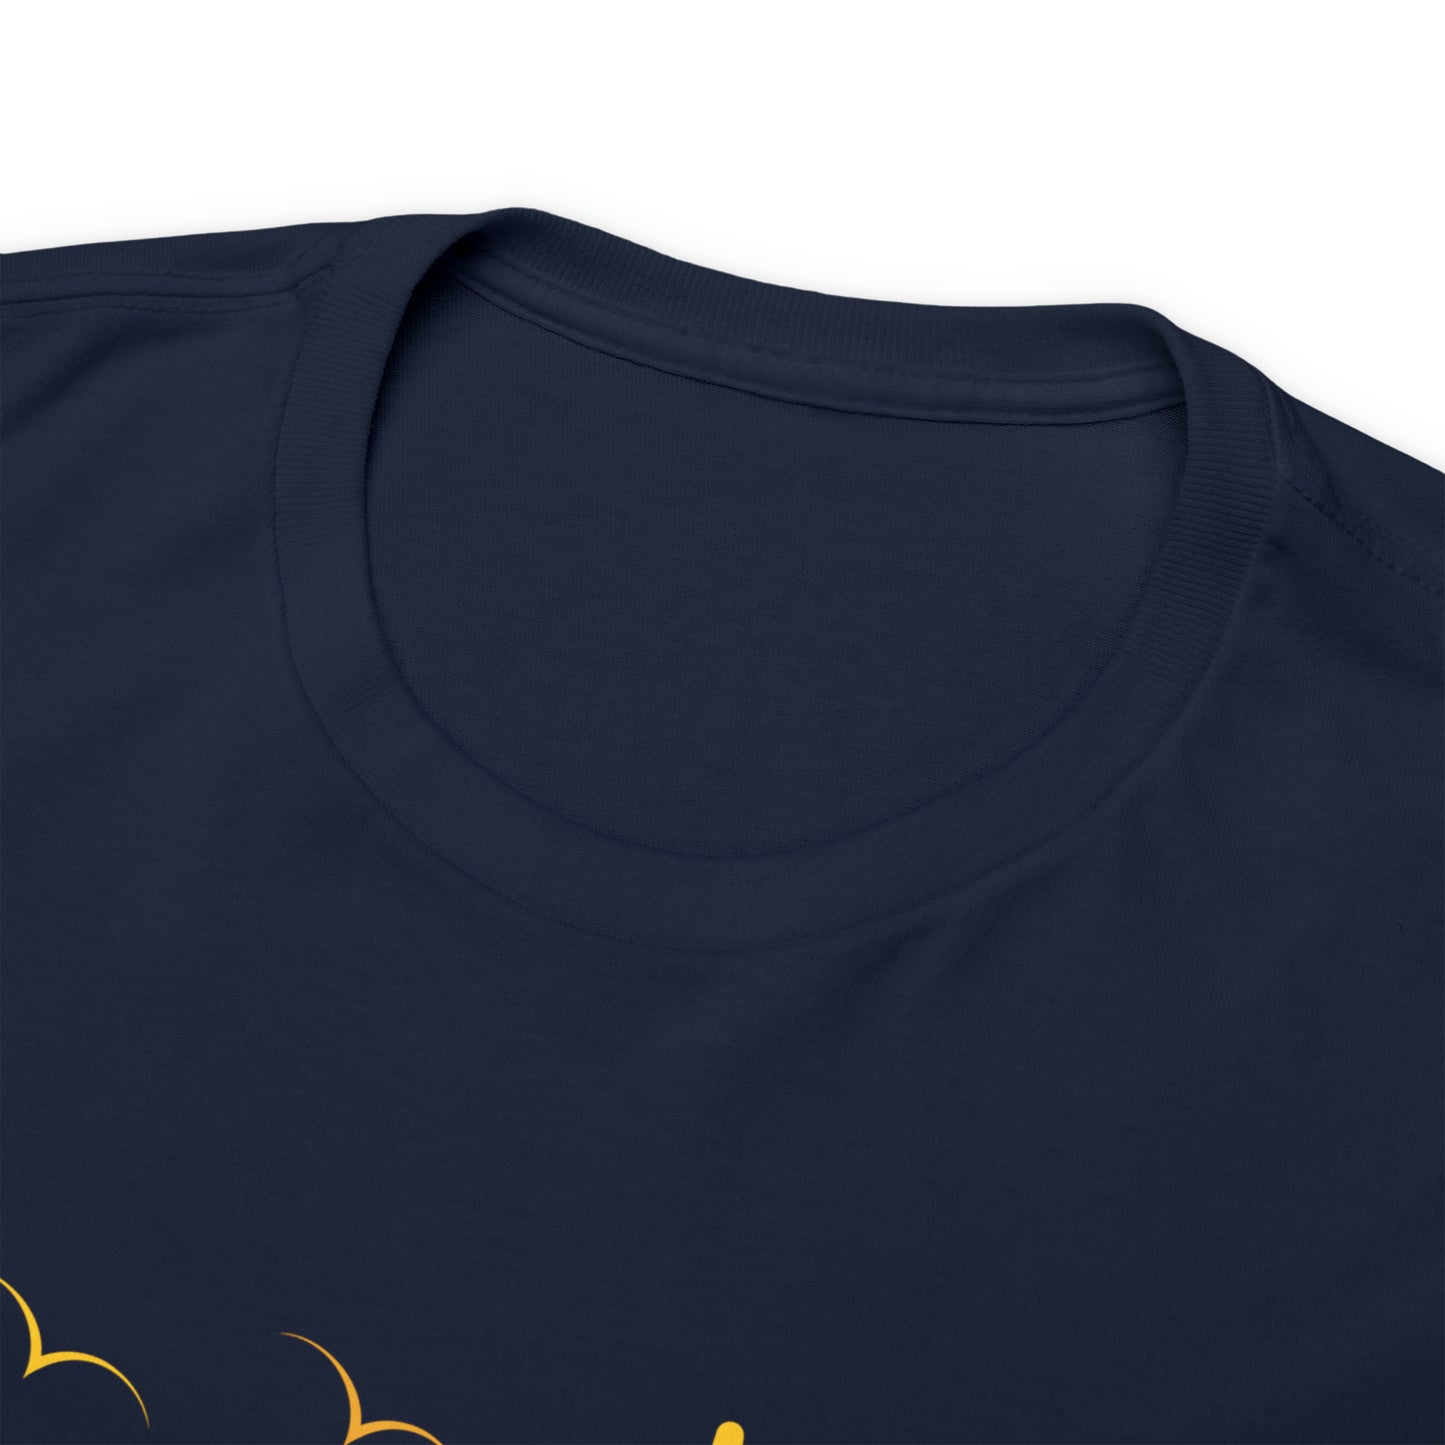 Hello Summer Graphic T-Shirt (Unisex)